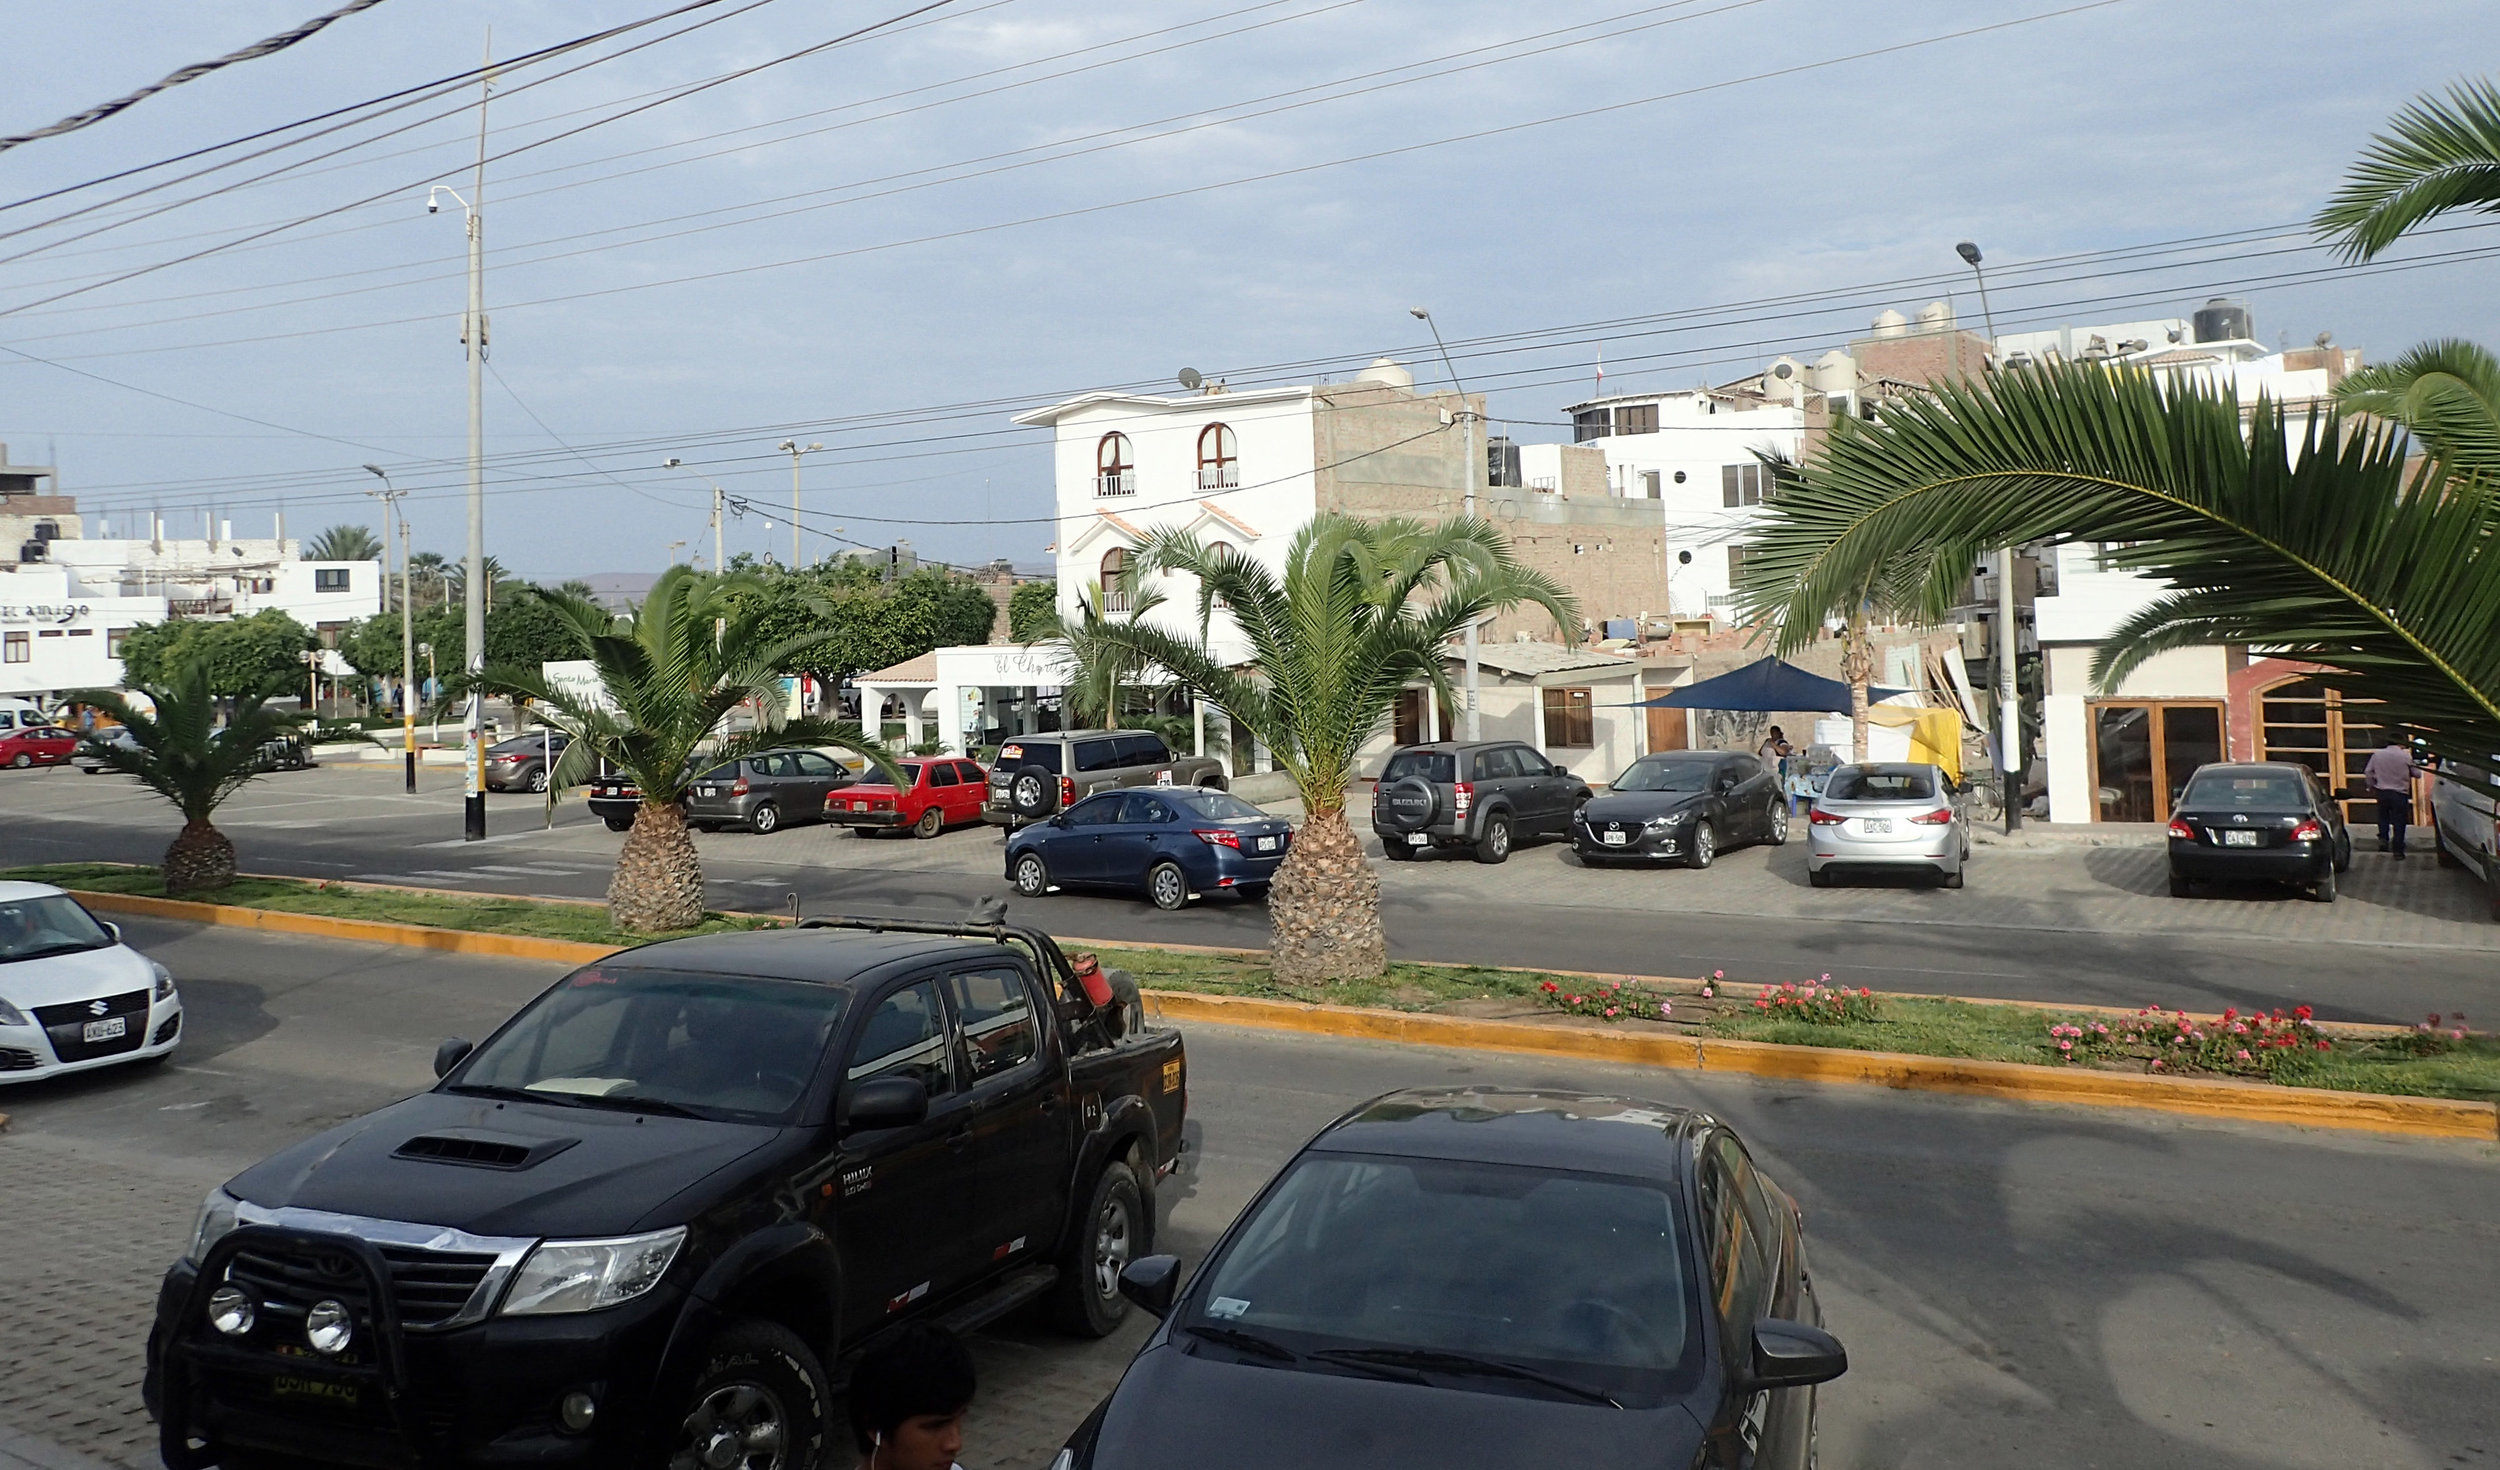 downtown Paracas 1-9-18.jpg